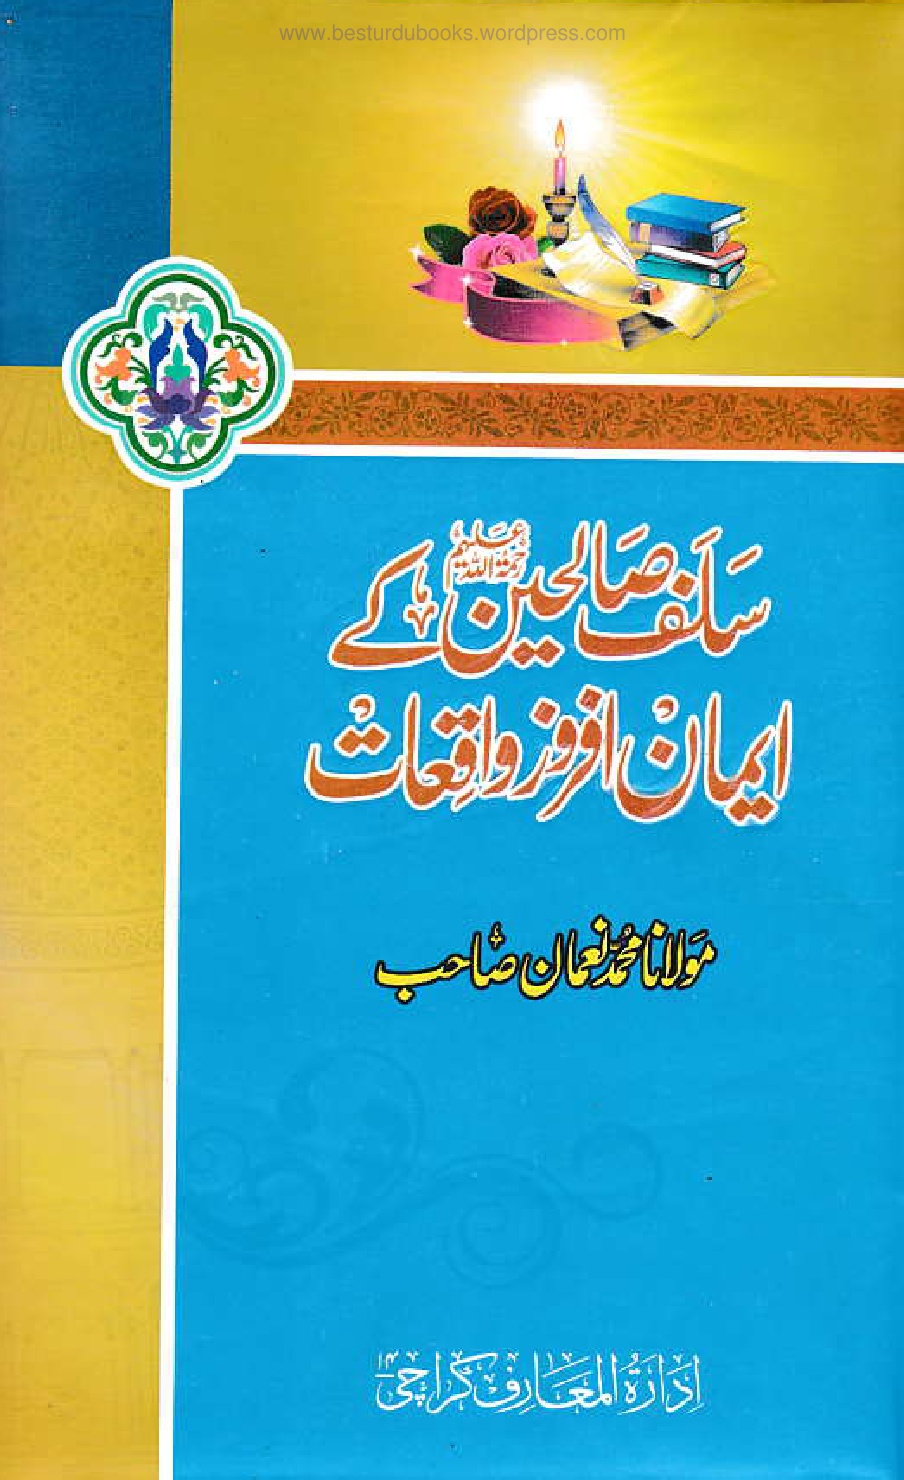 Salaf Saleheen Kay Iman Afroz Waqiat by Maulana Muhammad Noman